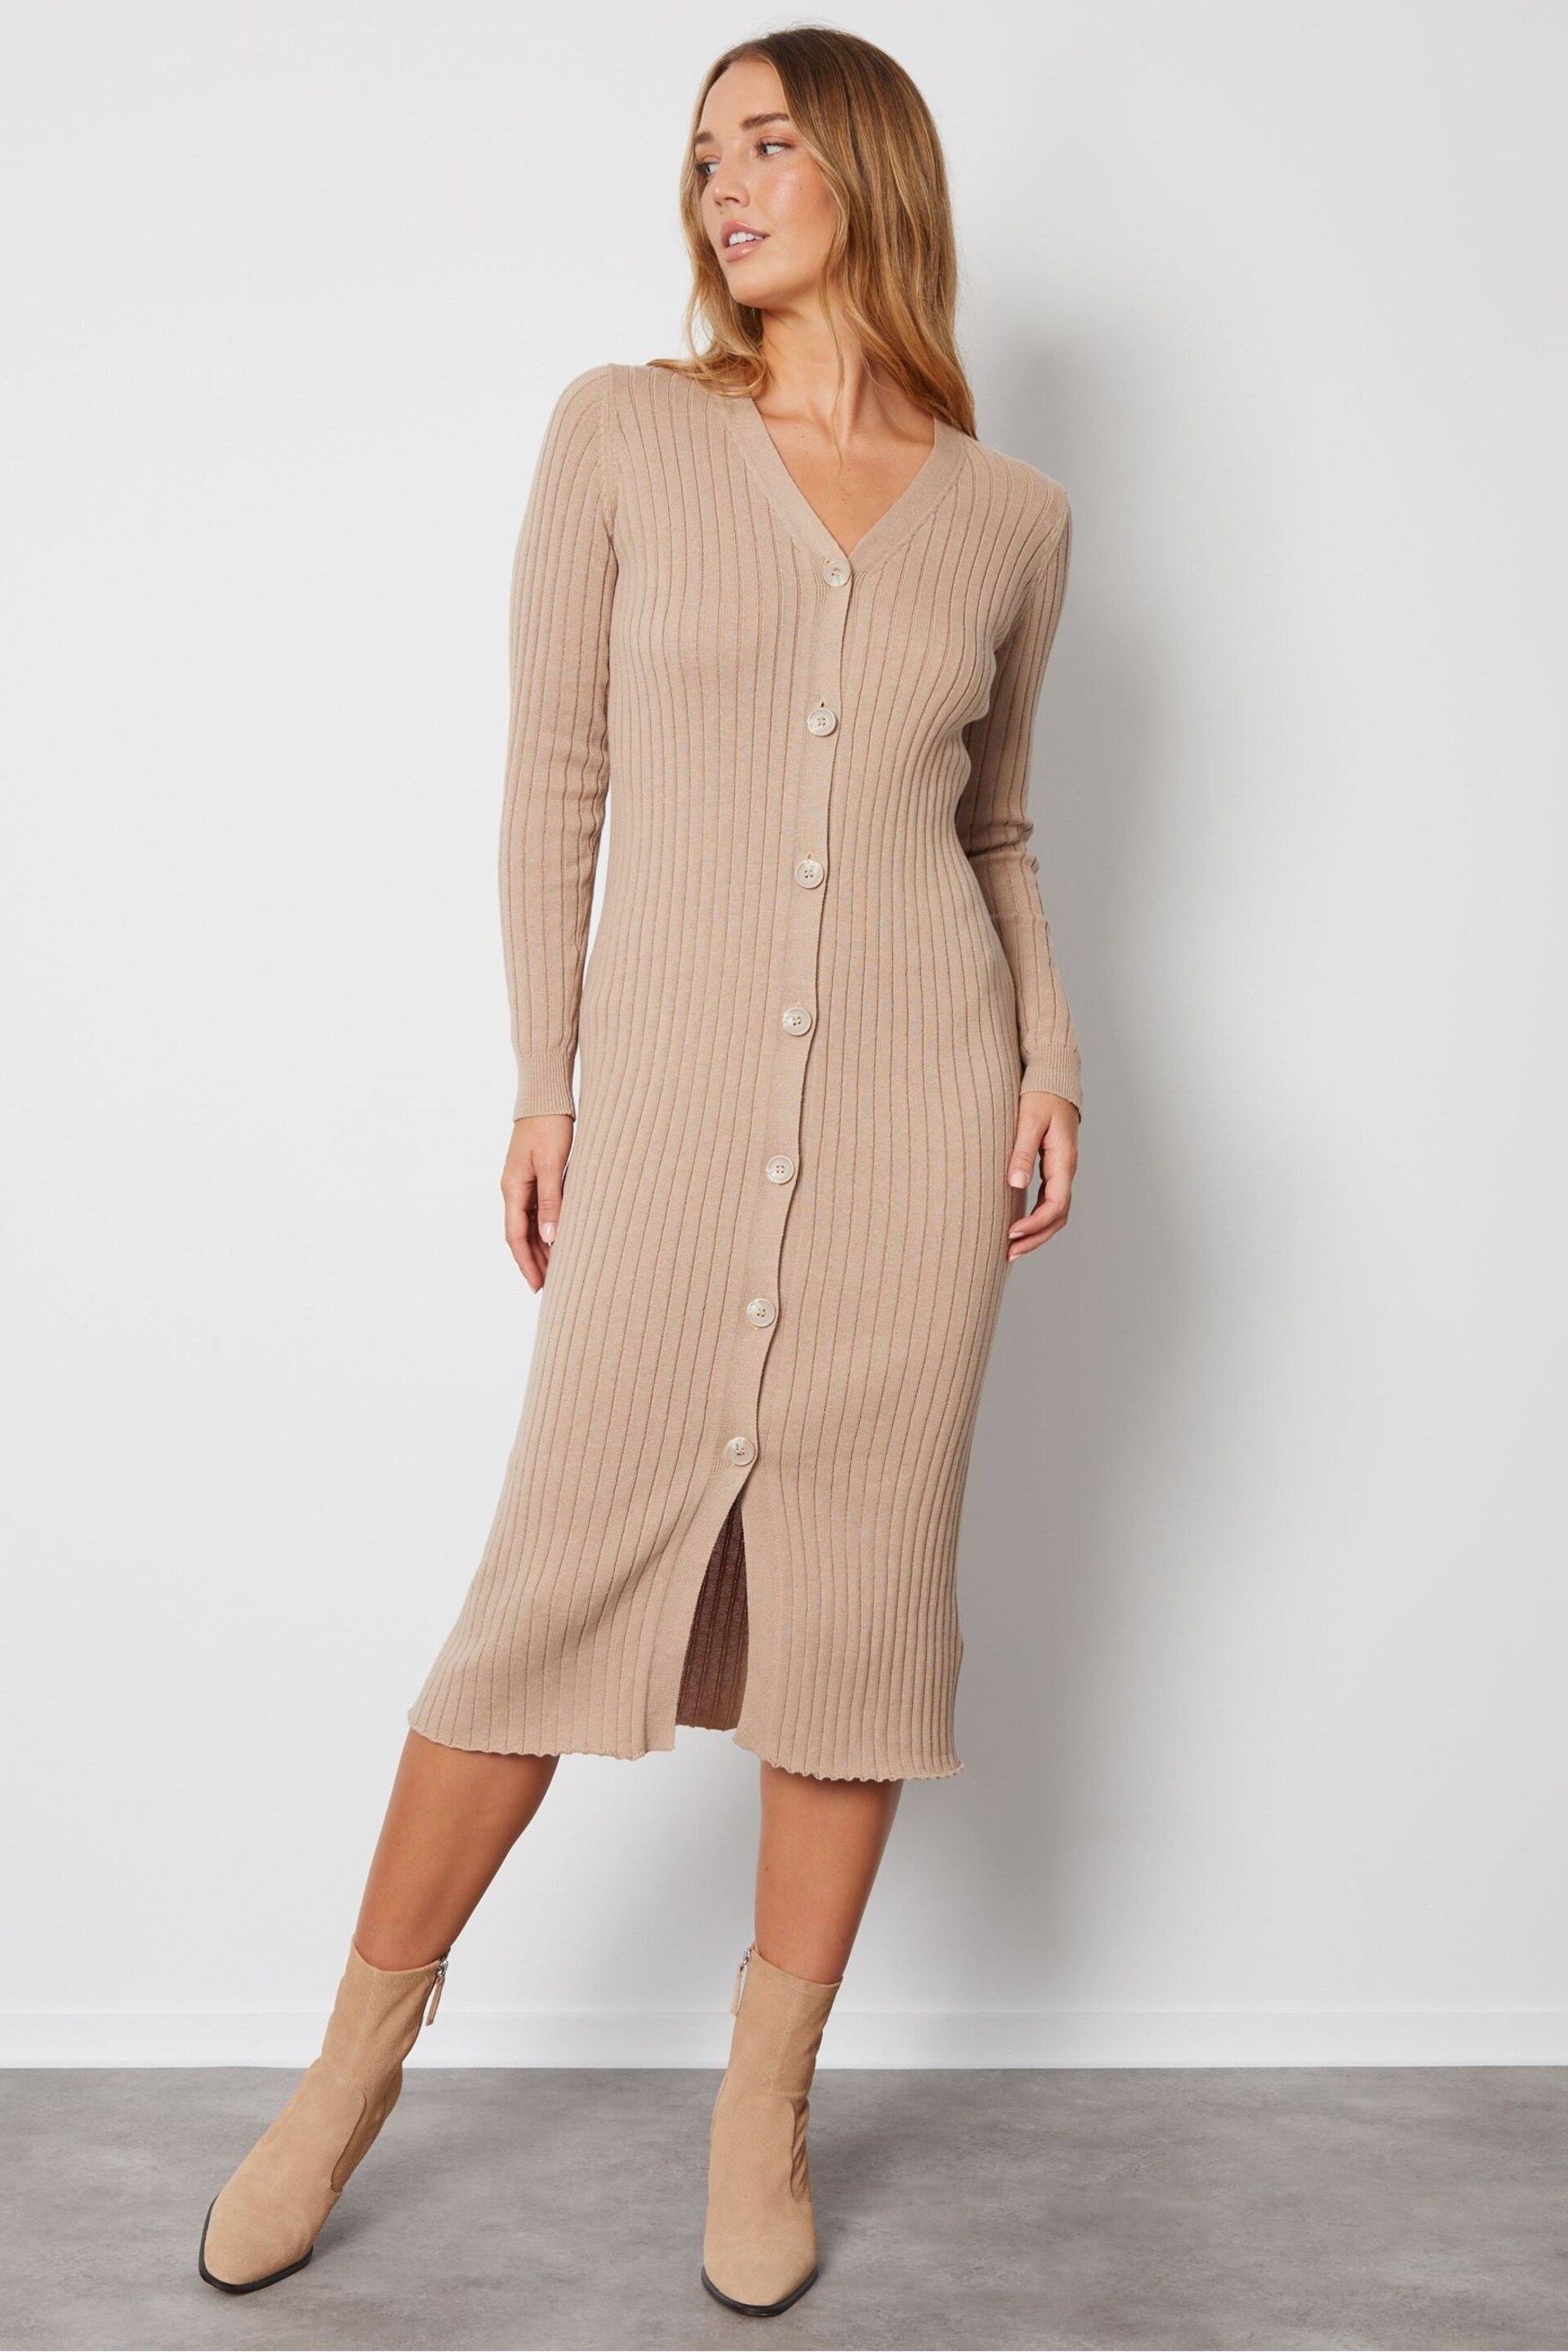 Threadbare Brown Cardigan Style Knitted Midi Dress - Image 1 of 1